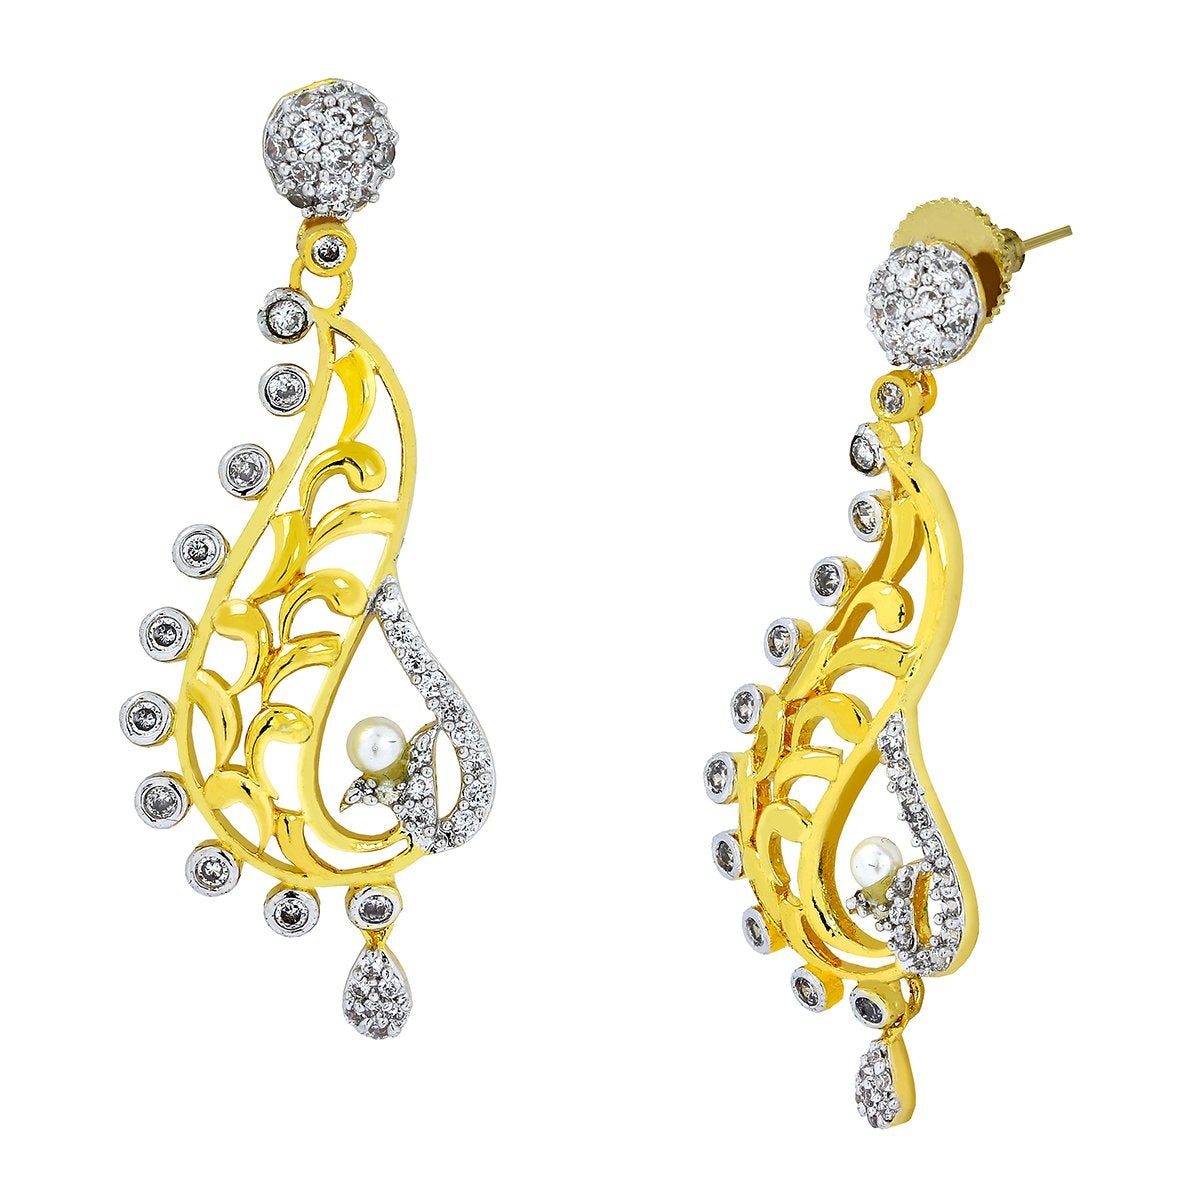 American Diamond Gold Gold-Plated Dangle & Drop Earring For Women